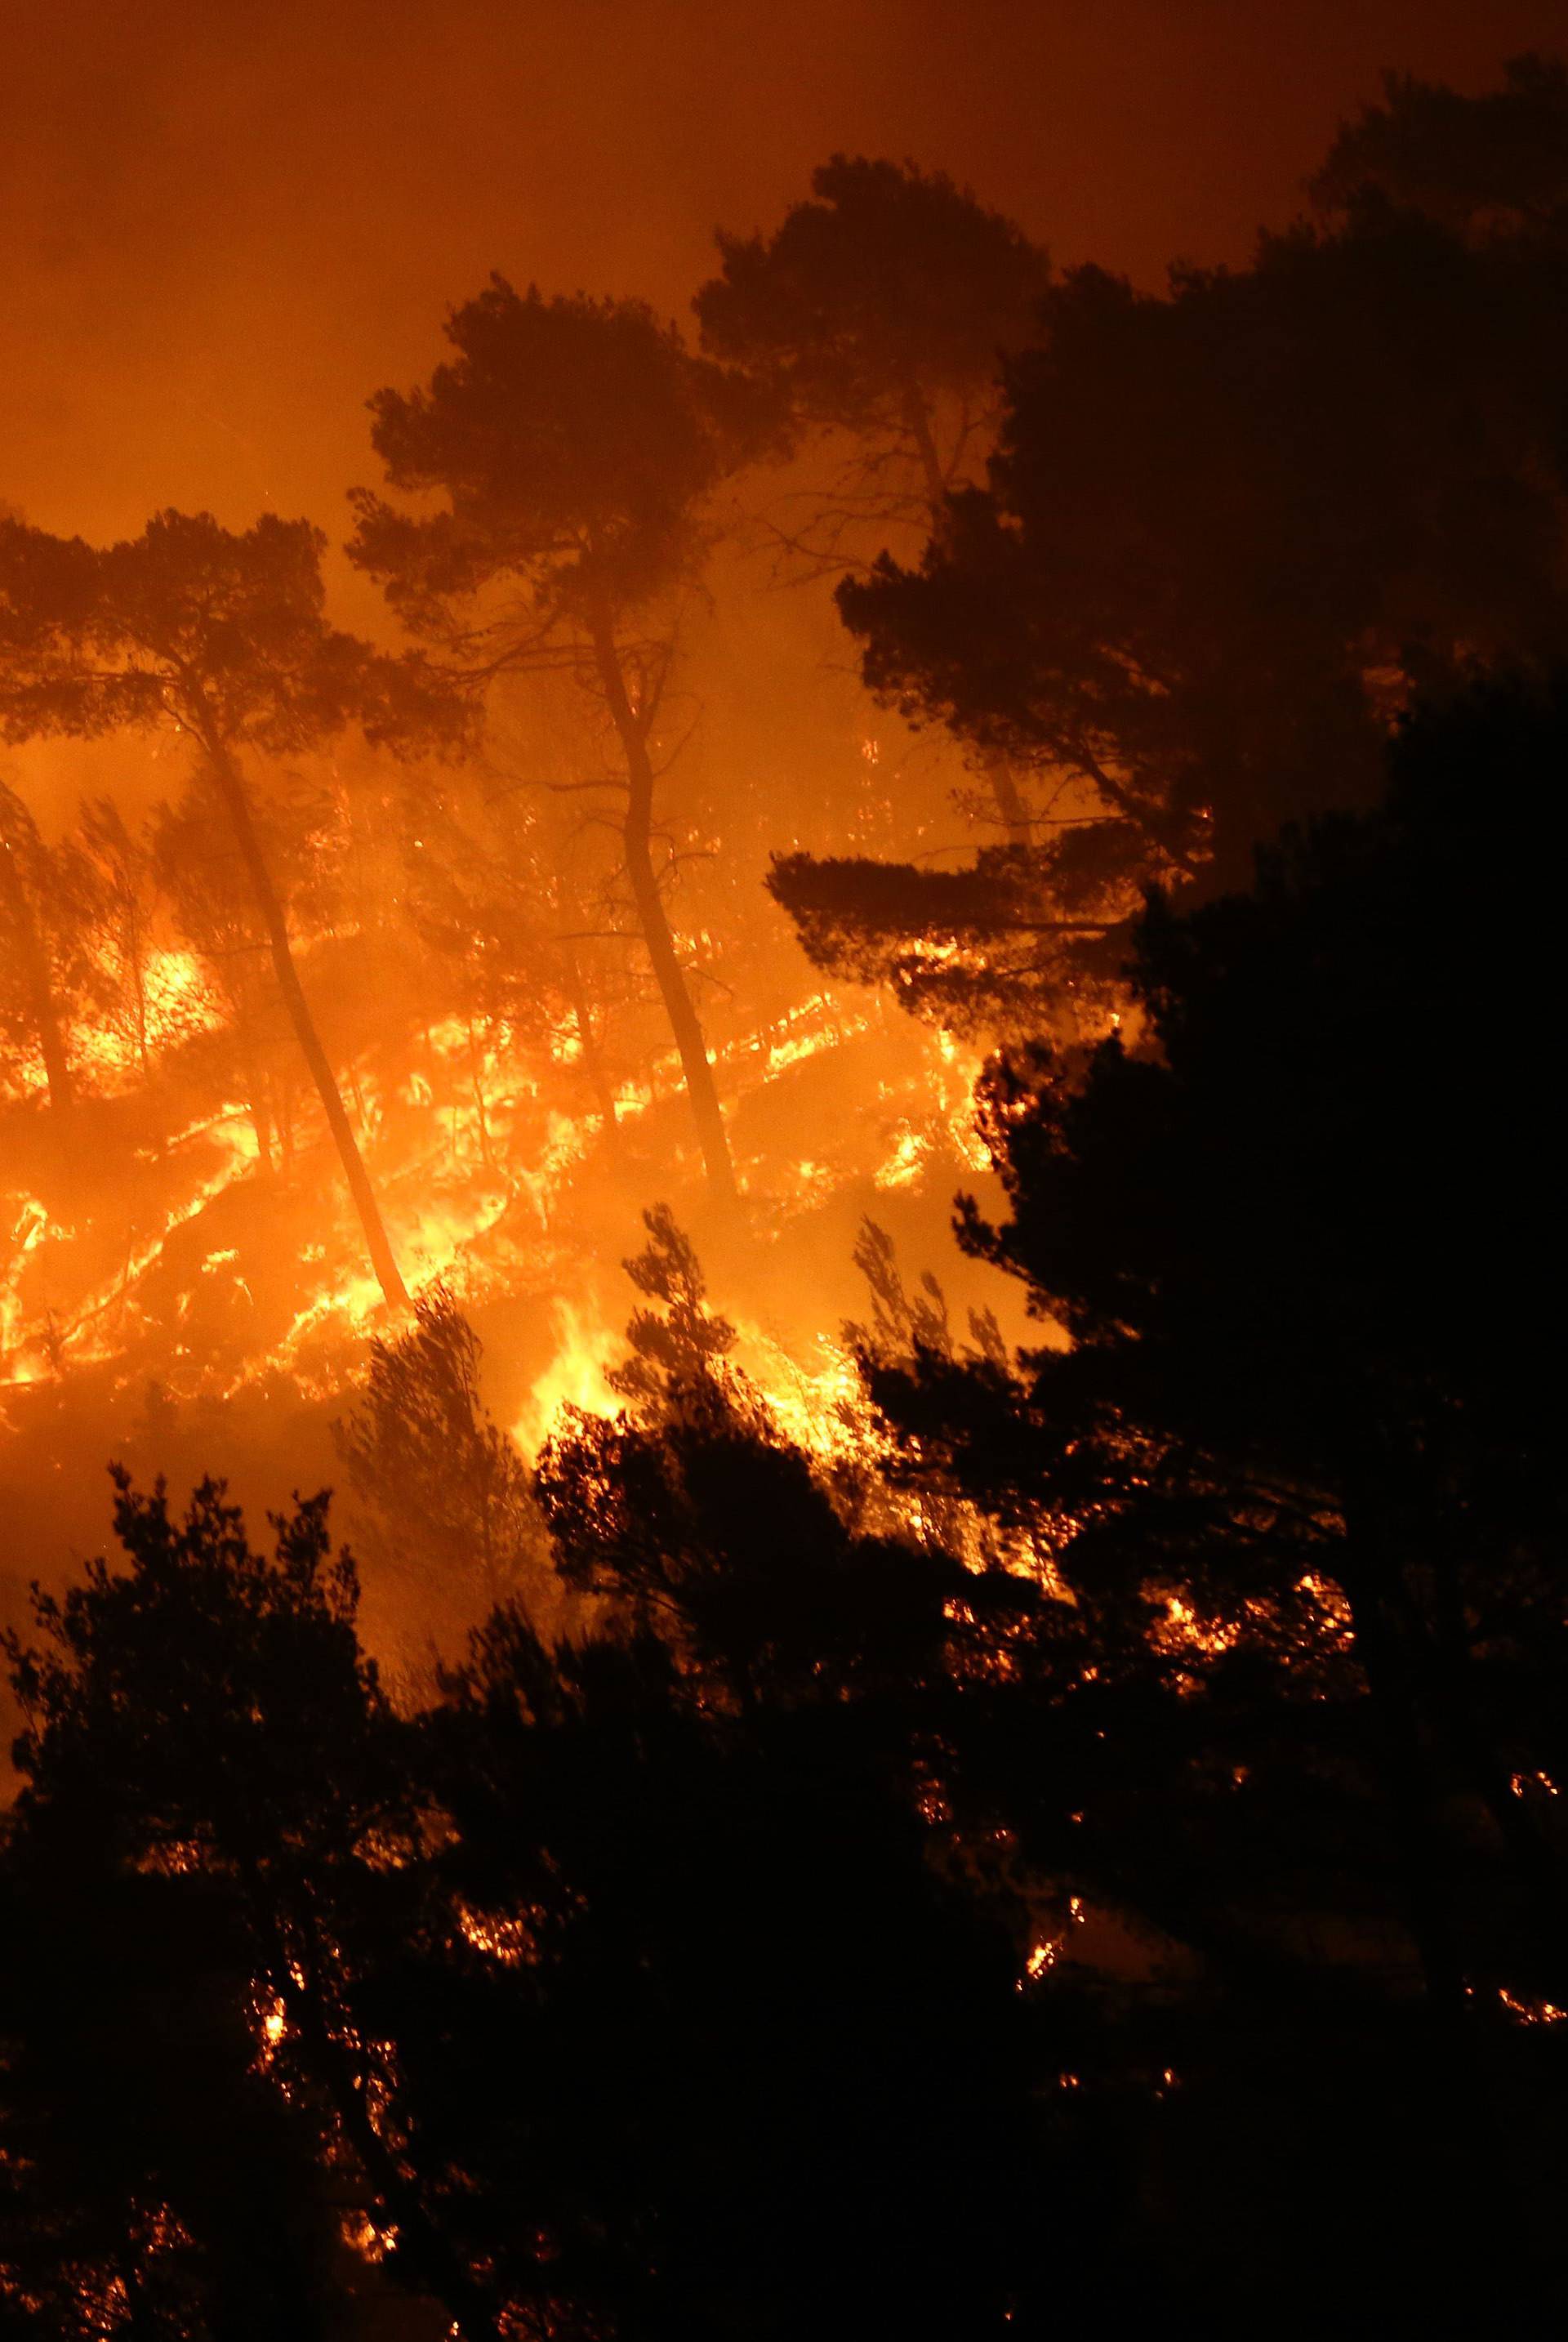 A wildfire is seen in the village of Mravince near Split